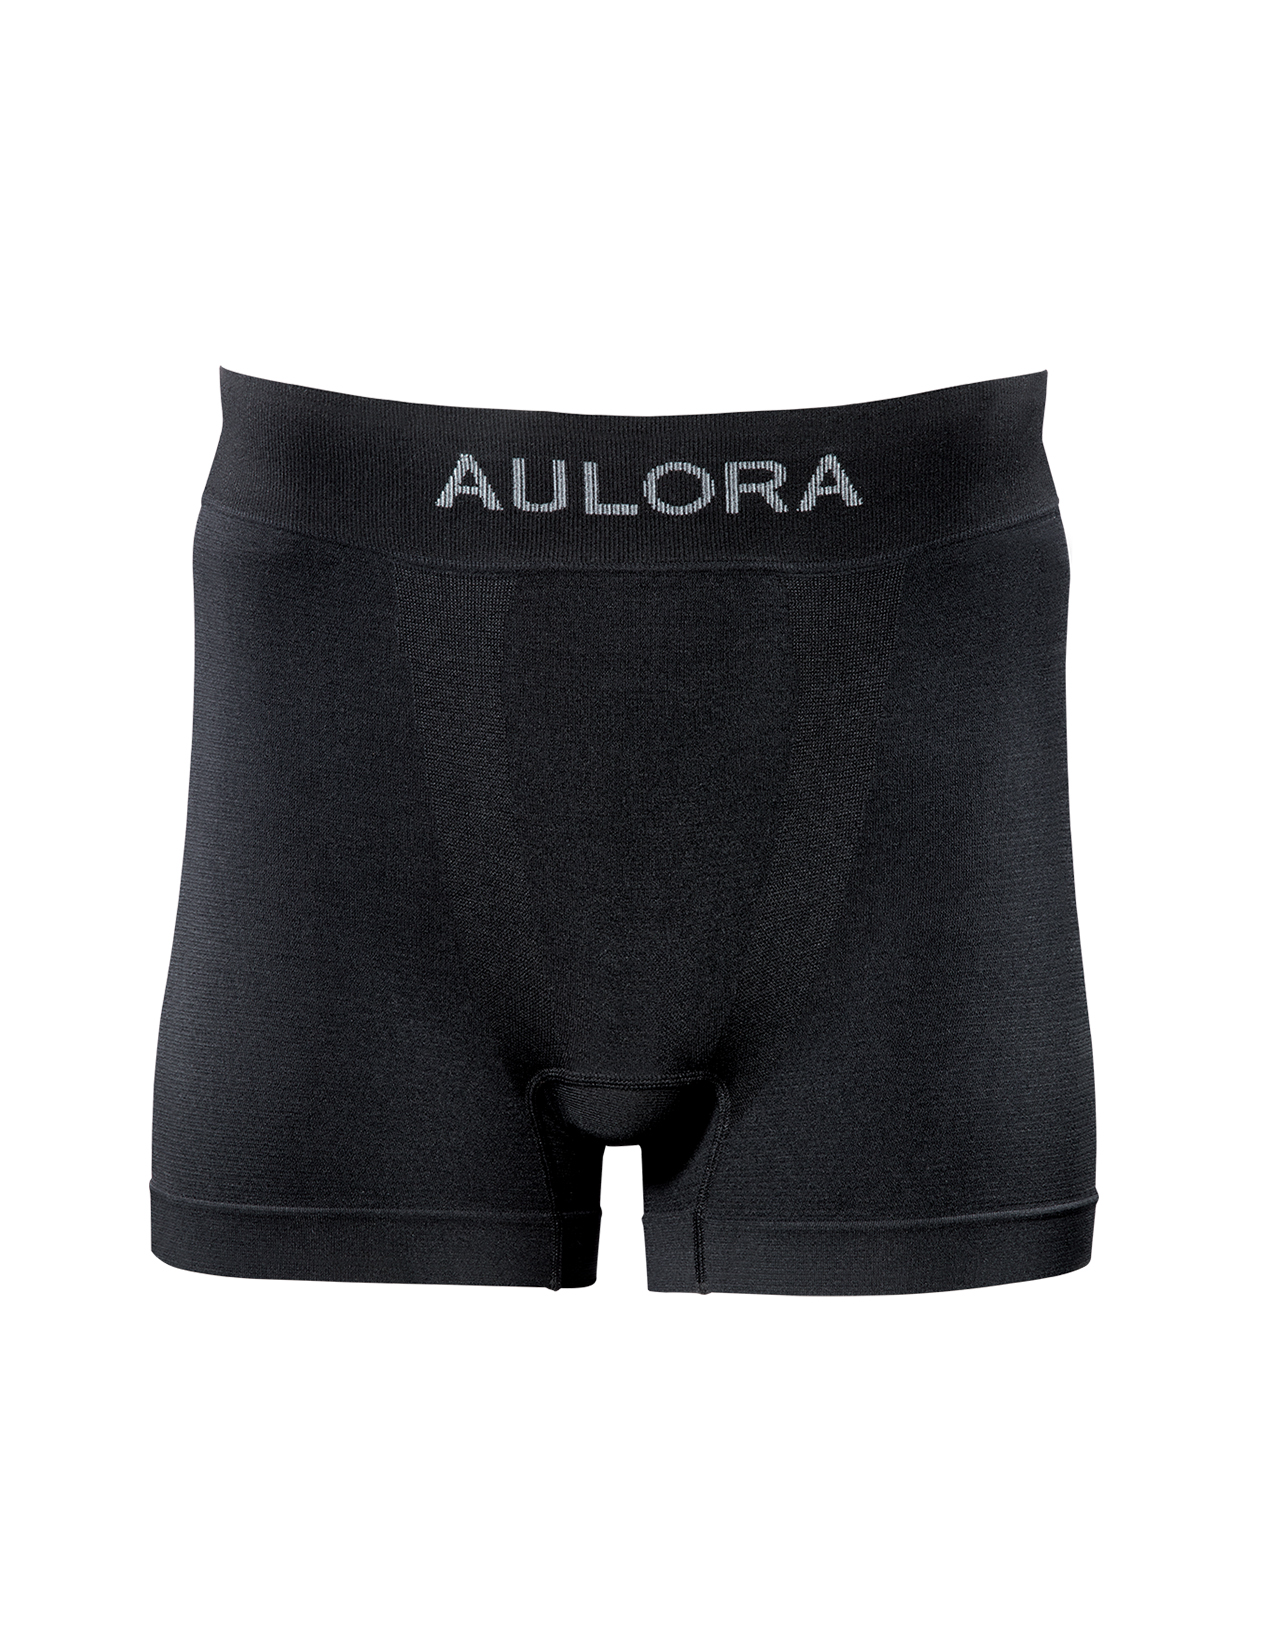 aulora-boxer-03-new